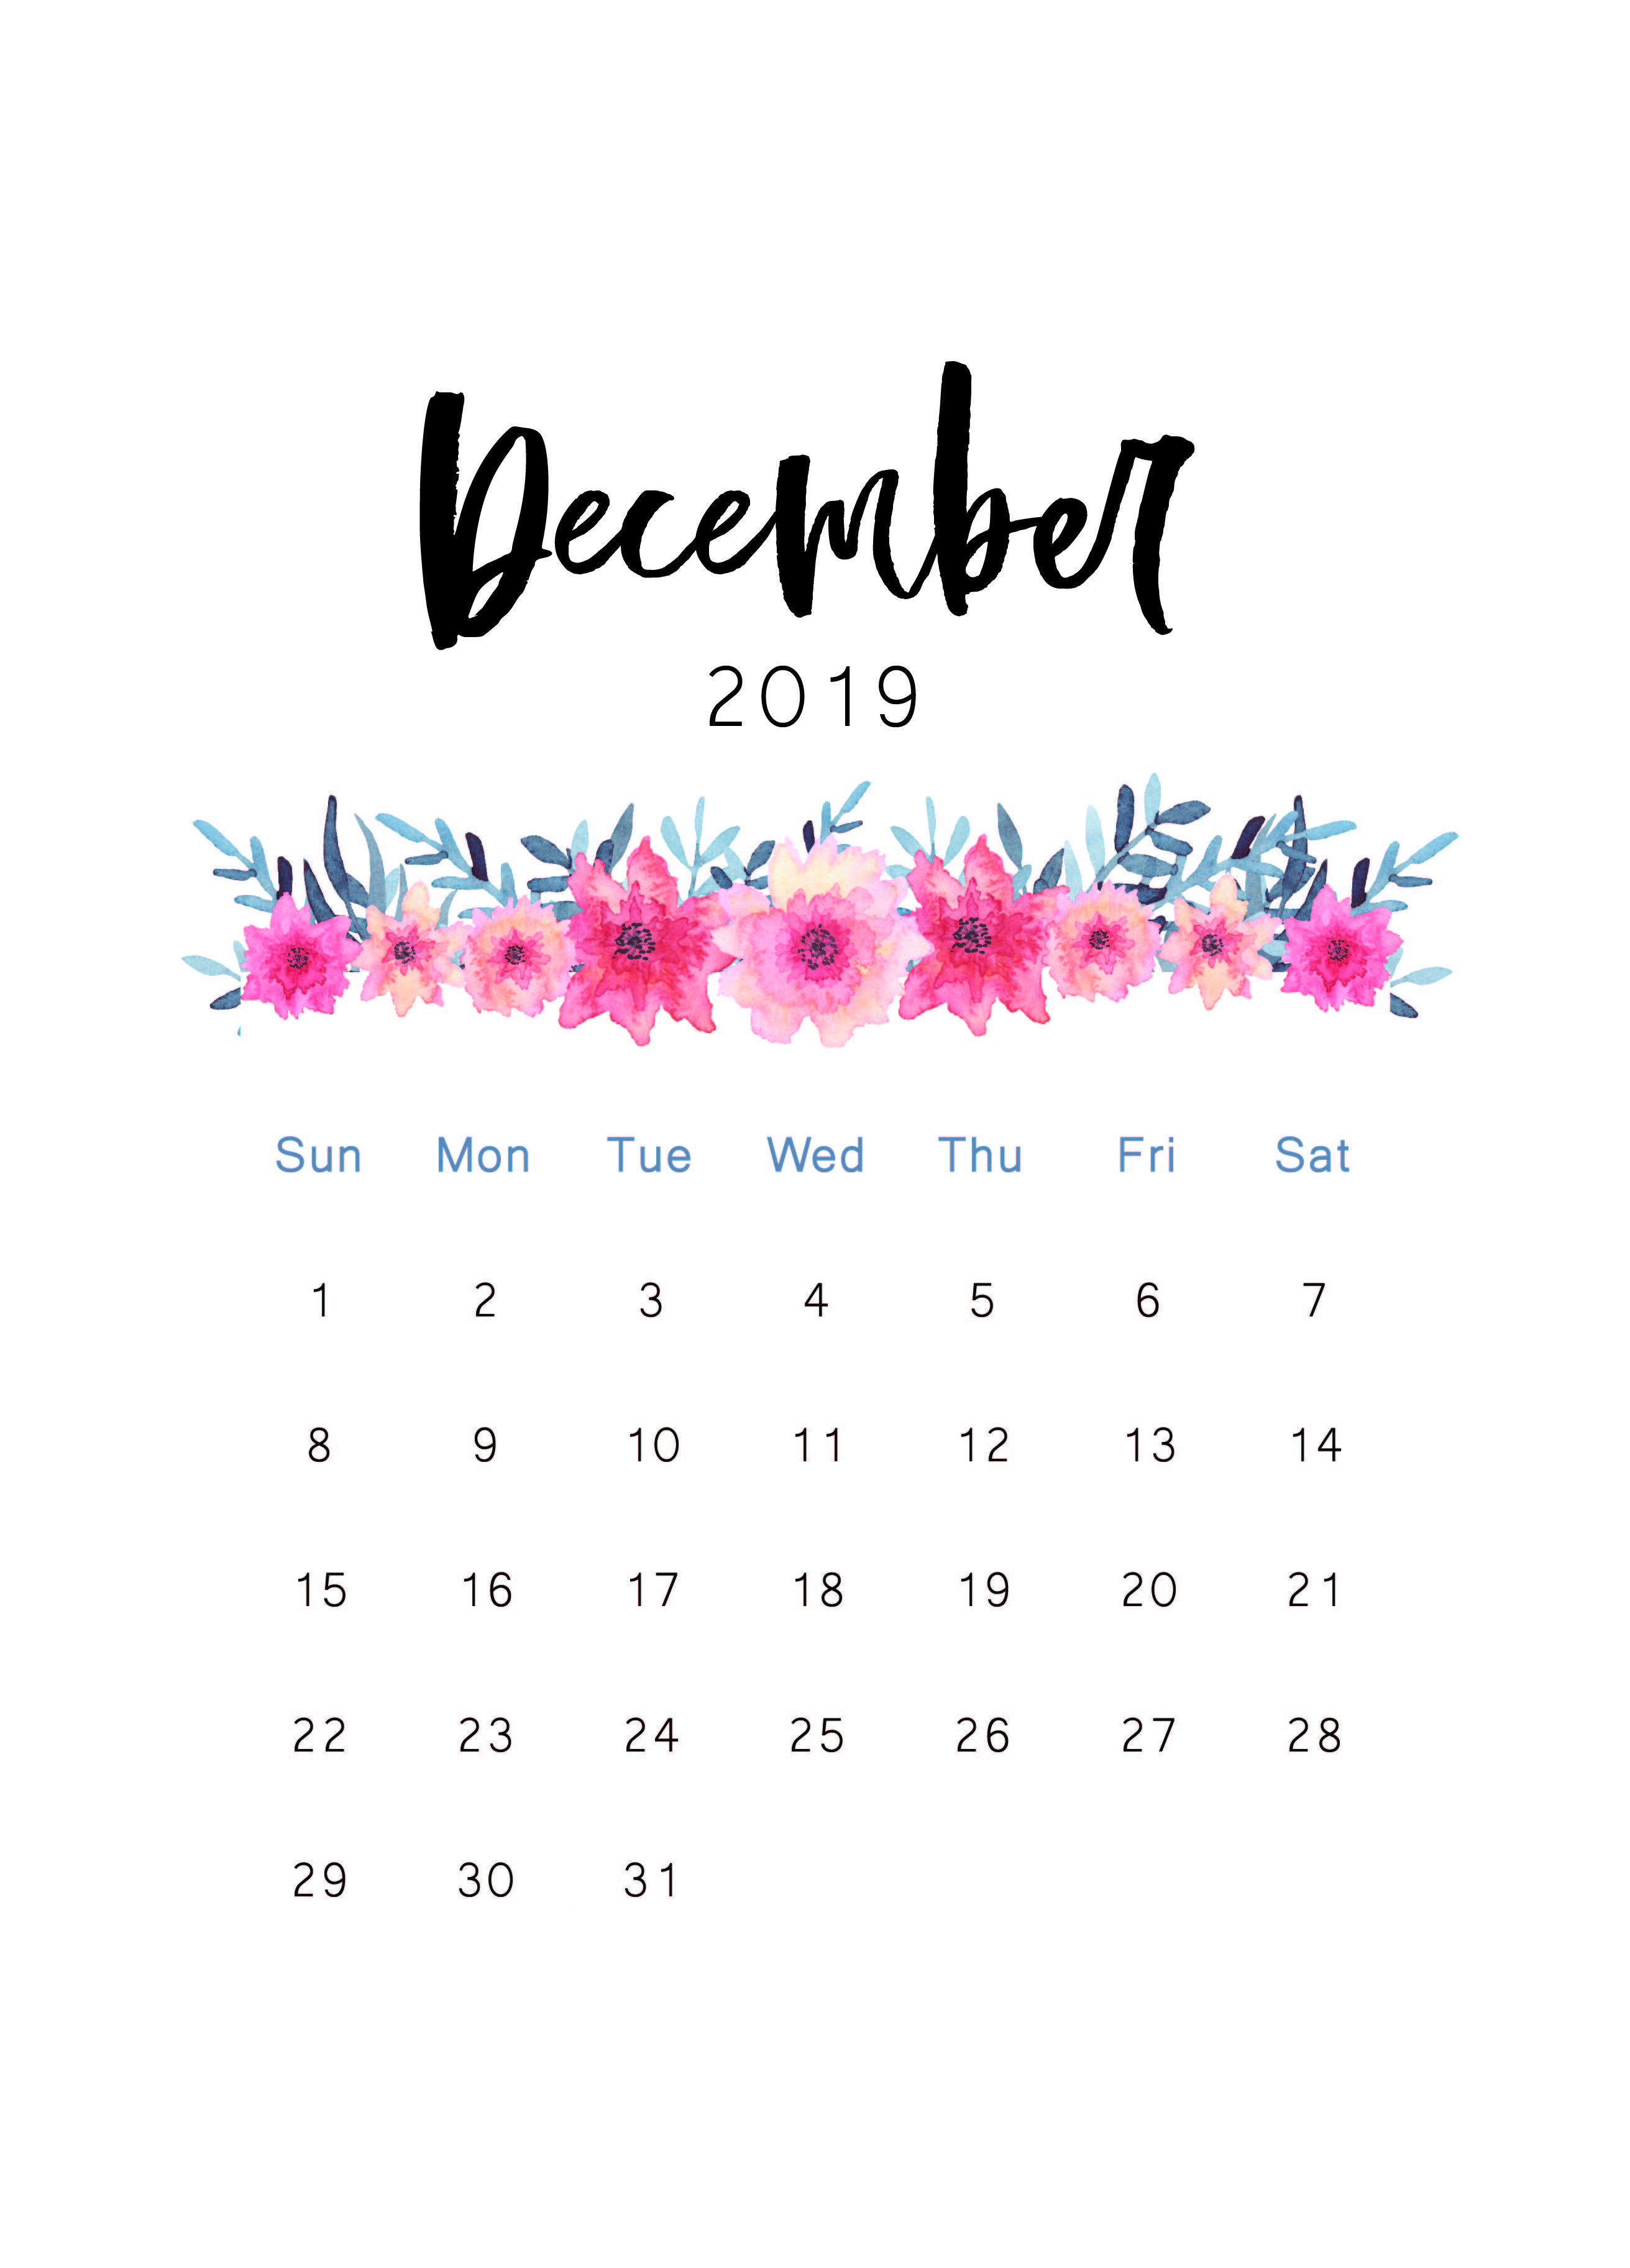 December 2019 Calendar Wallpapers Wallpaper Cave Images, Photos, Reviews